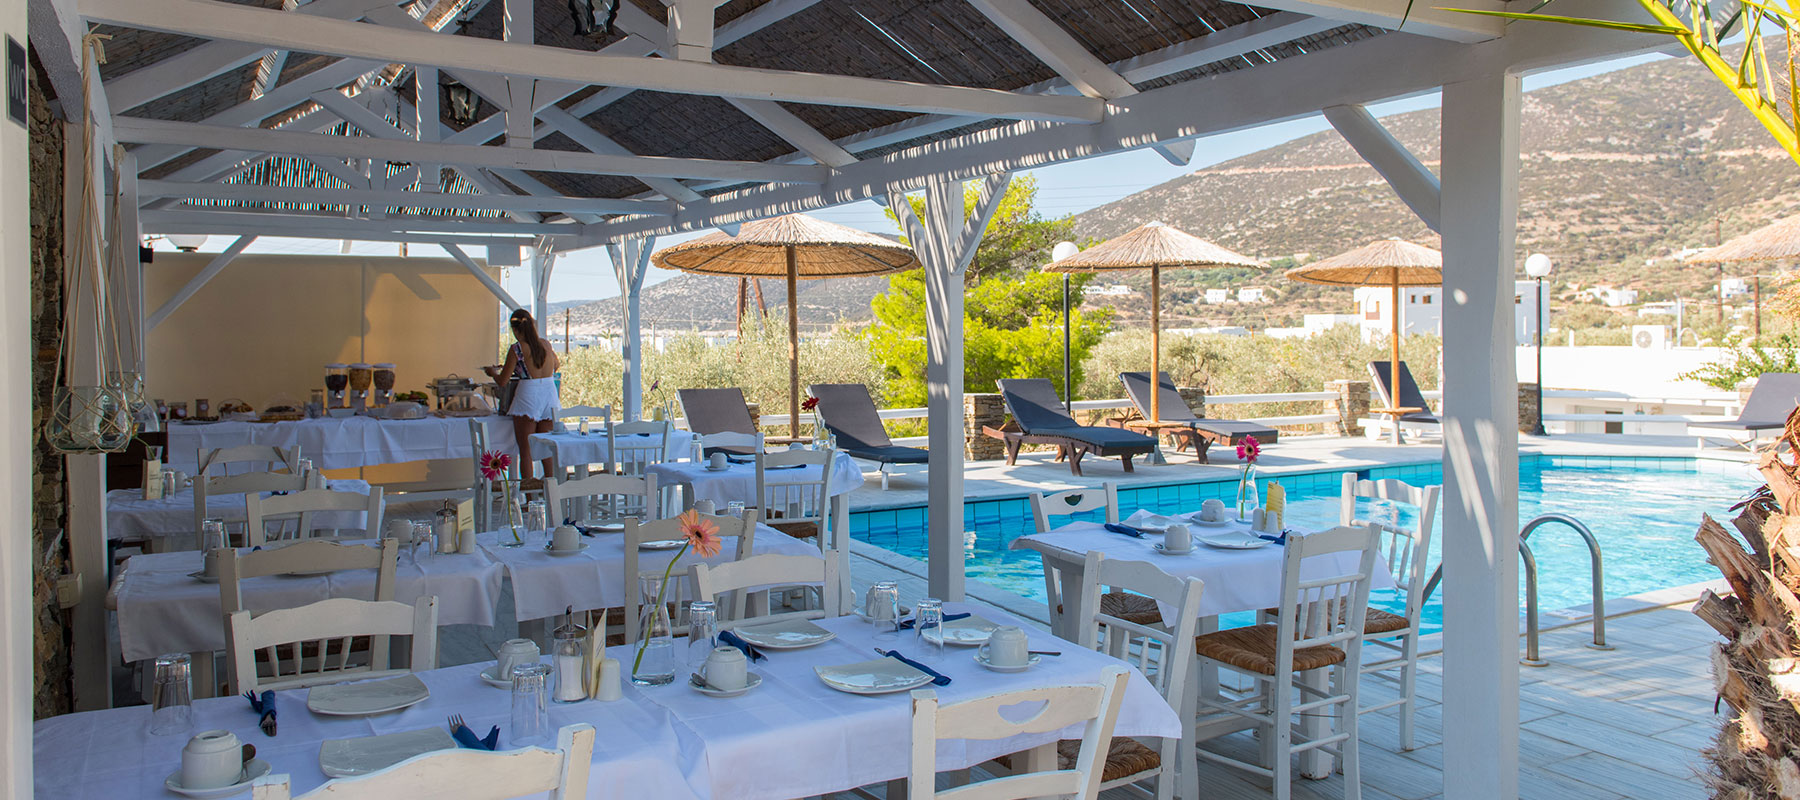 Espace de petit-déjeuner au bord de la piscine de la Villa Irini à Platis Gialos